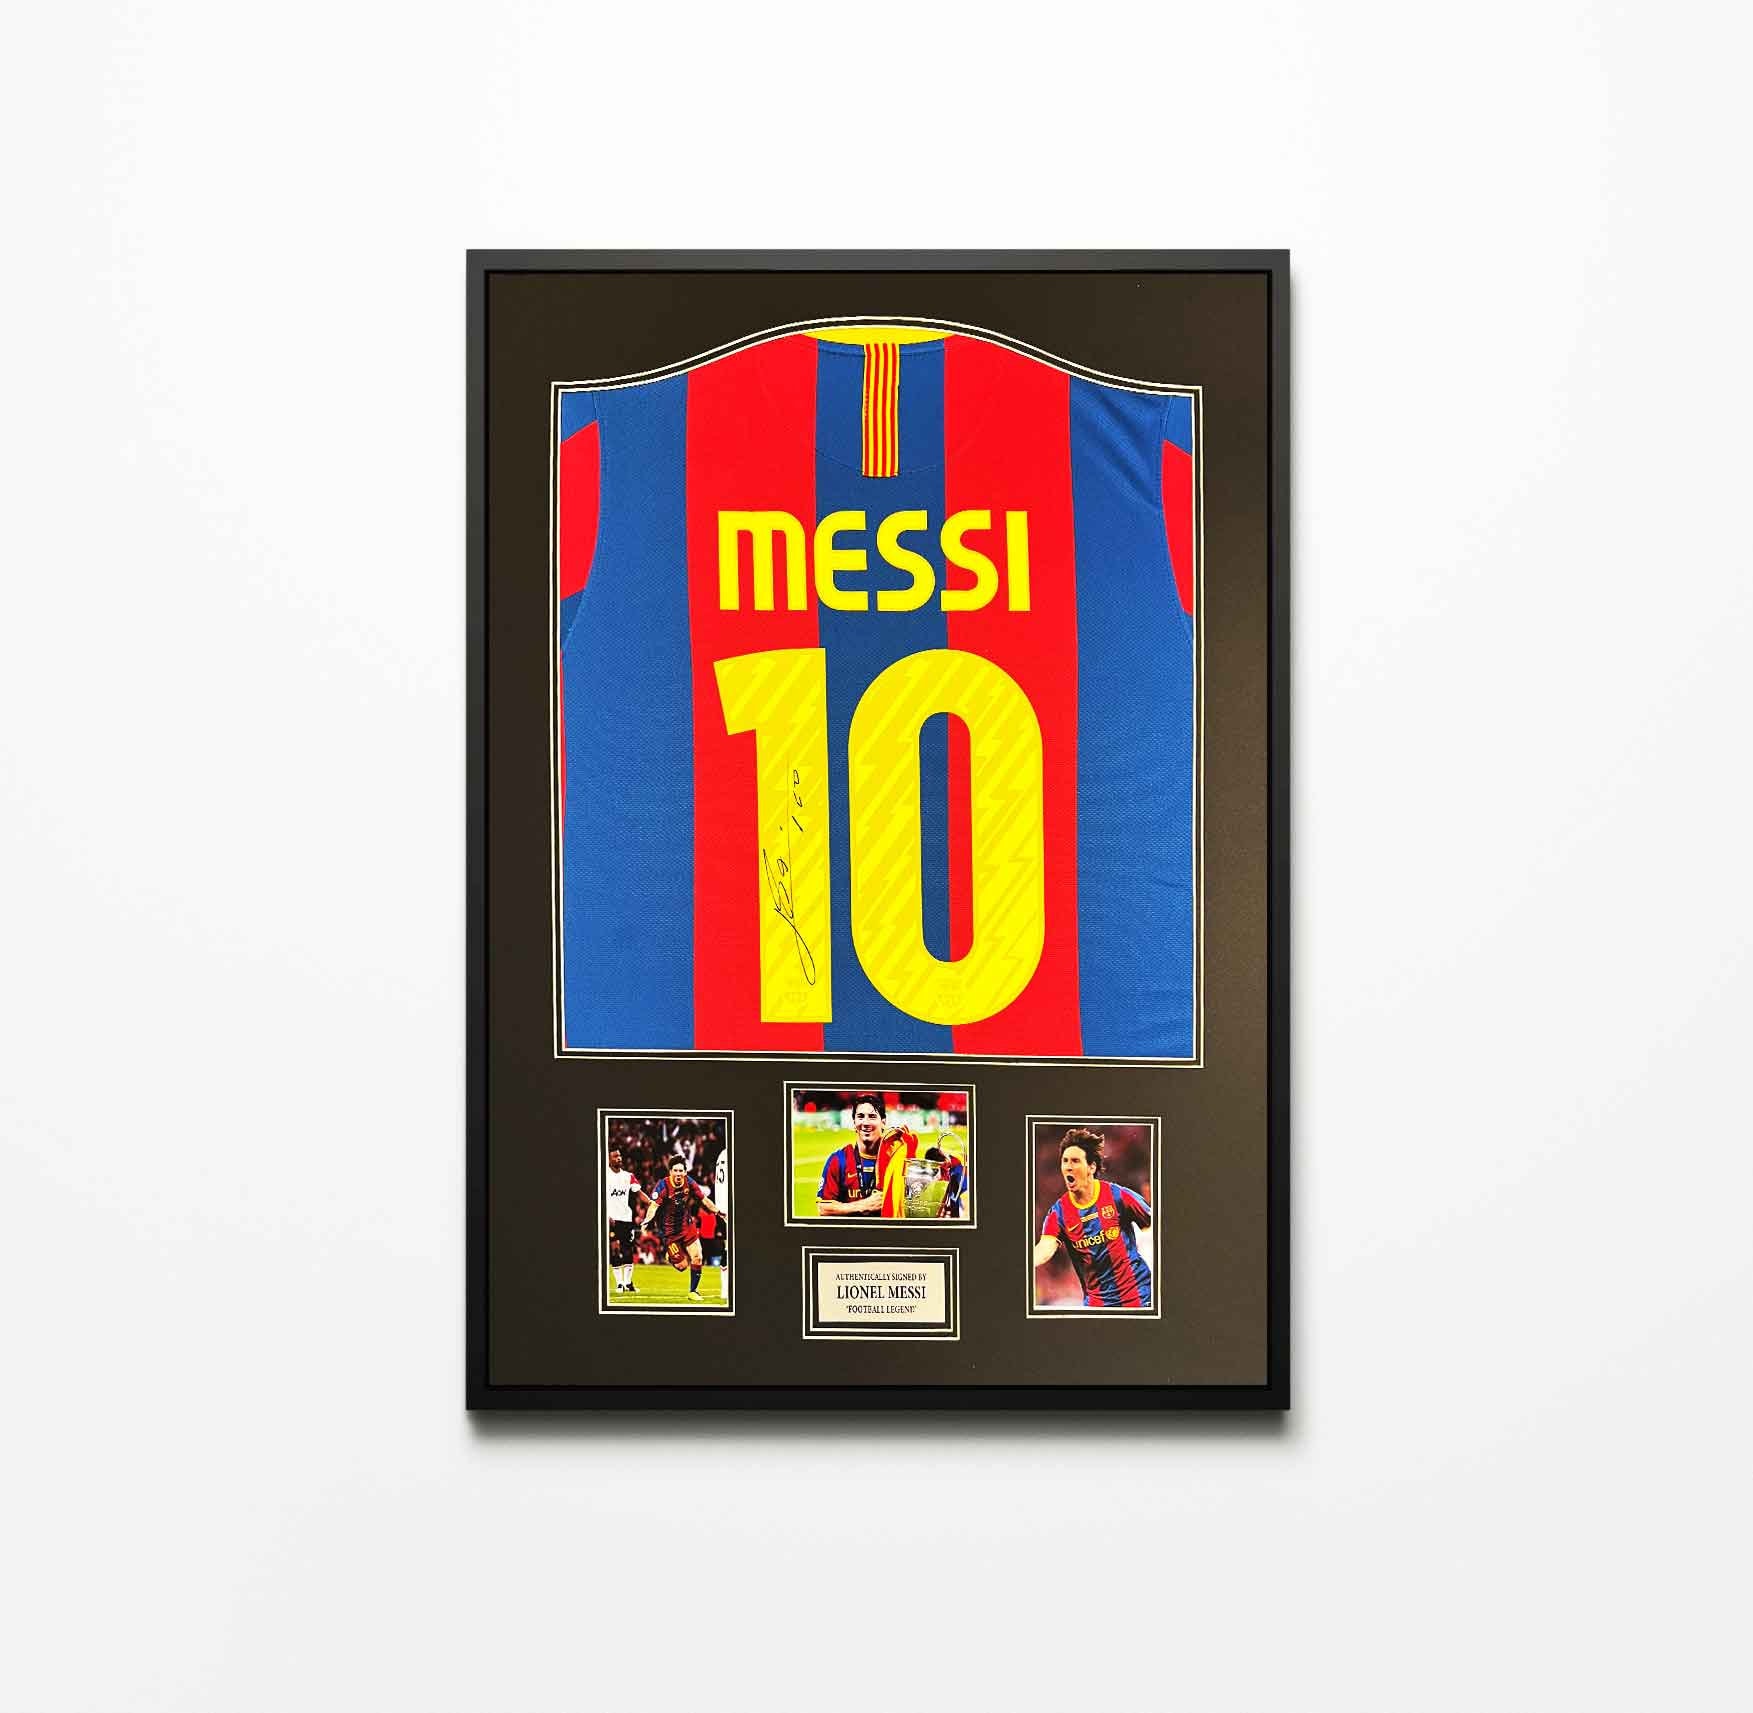 Lionel Messi Signed Argentina Jersey - Beckett COA - MVPs - Authentic  Signed Memorabilia